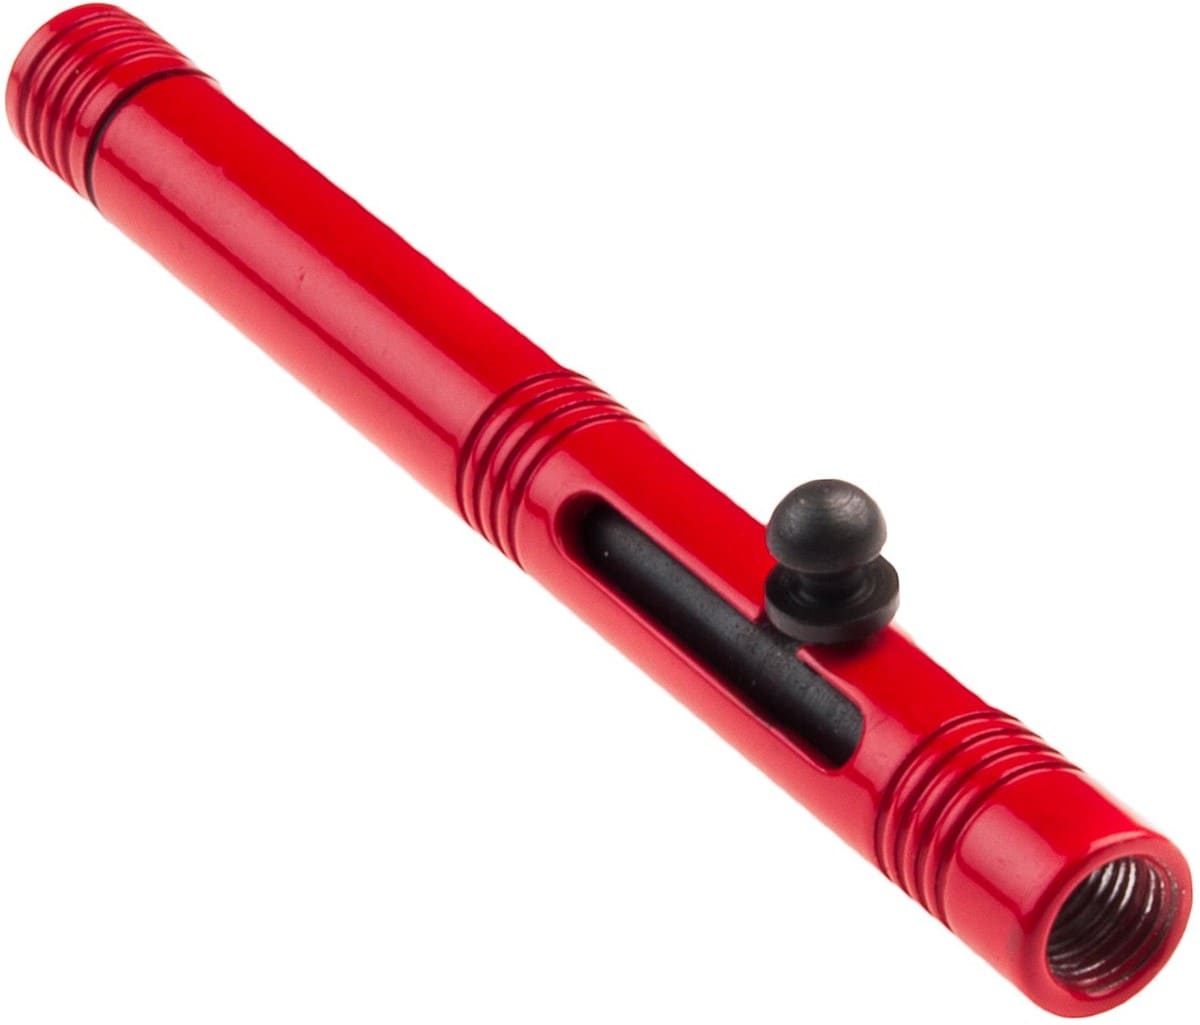 Tru Flare Pen Type Flare Launcher